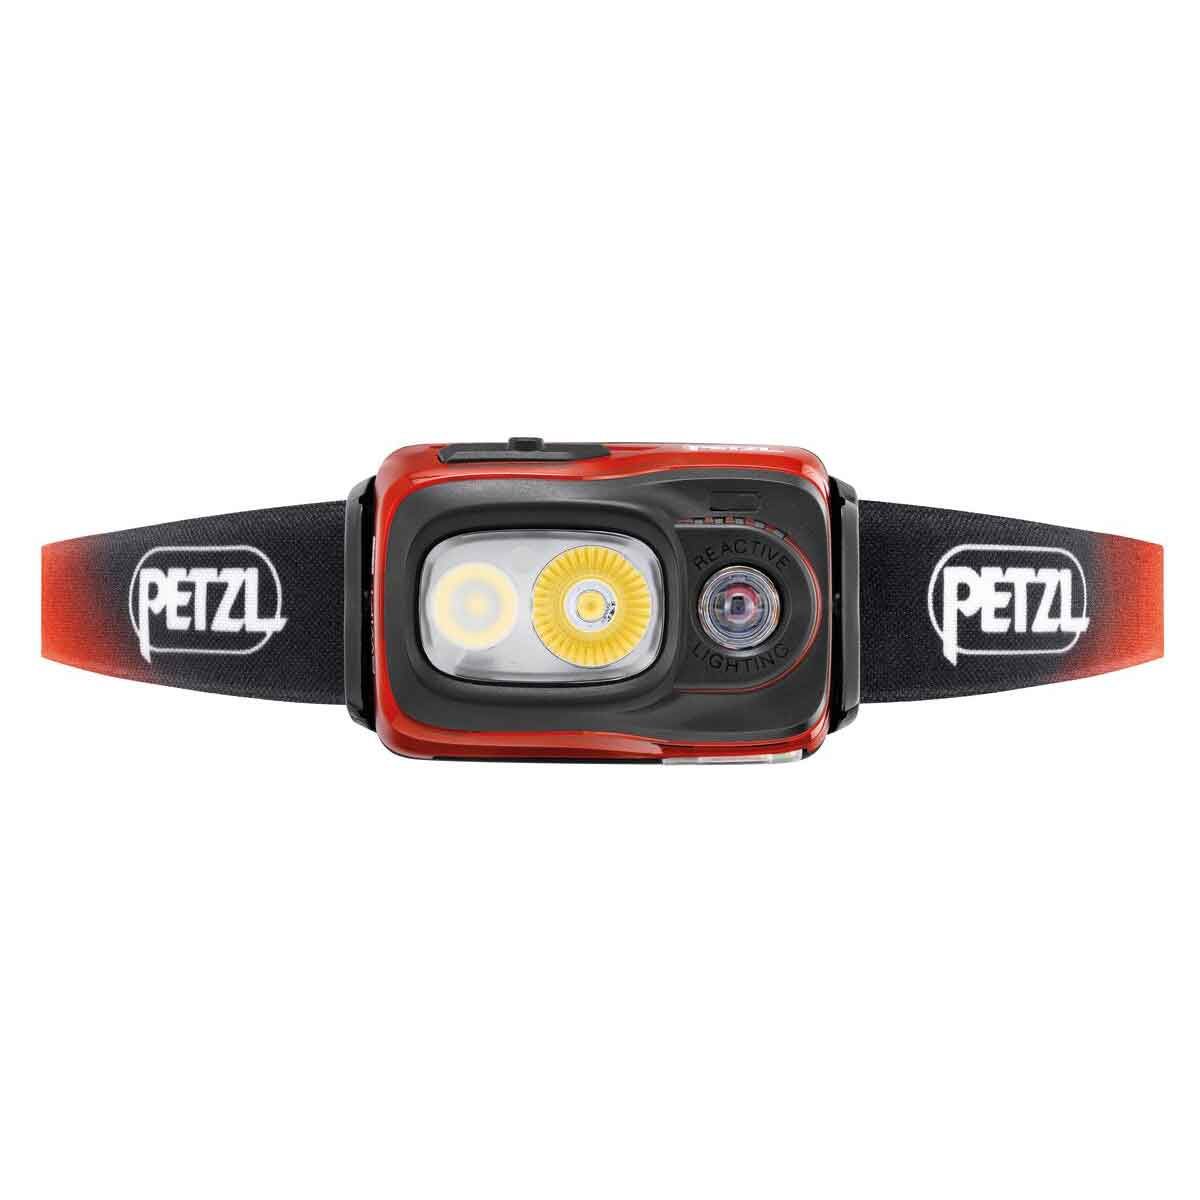 Petzl Swift RL headlamp